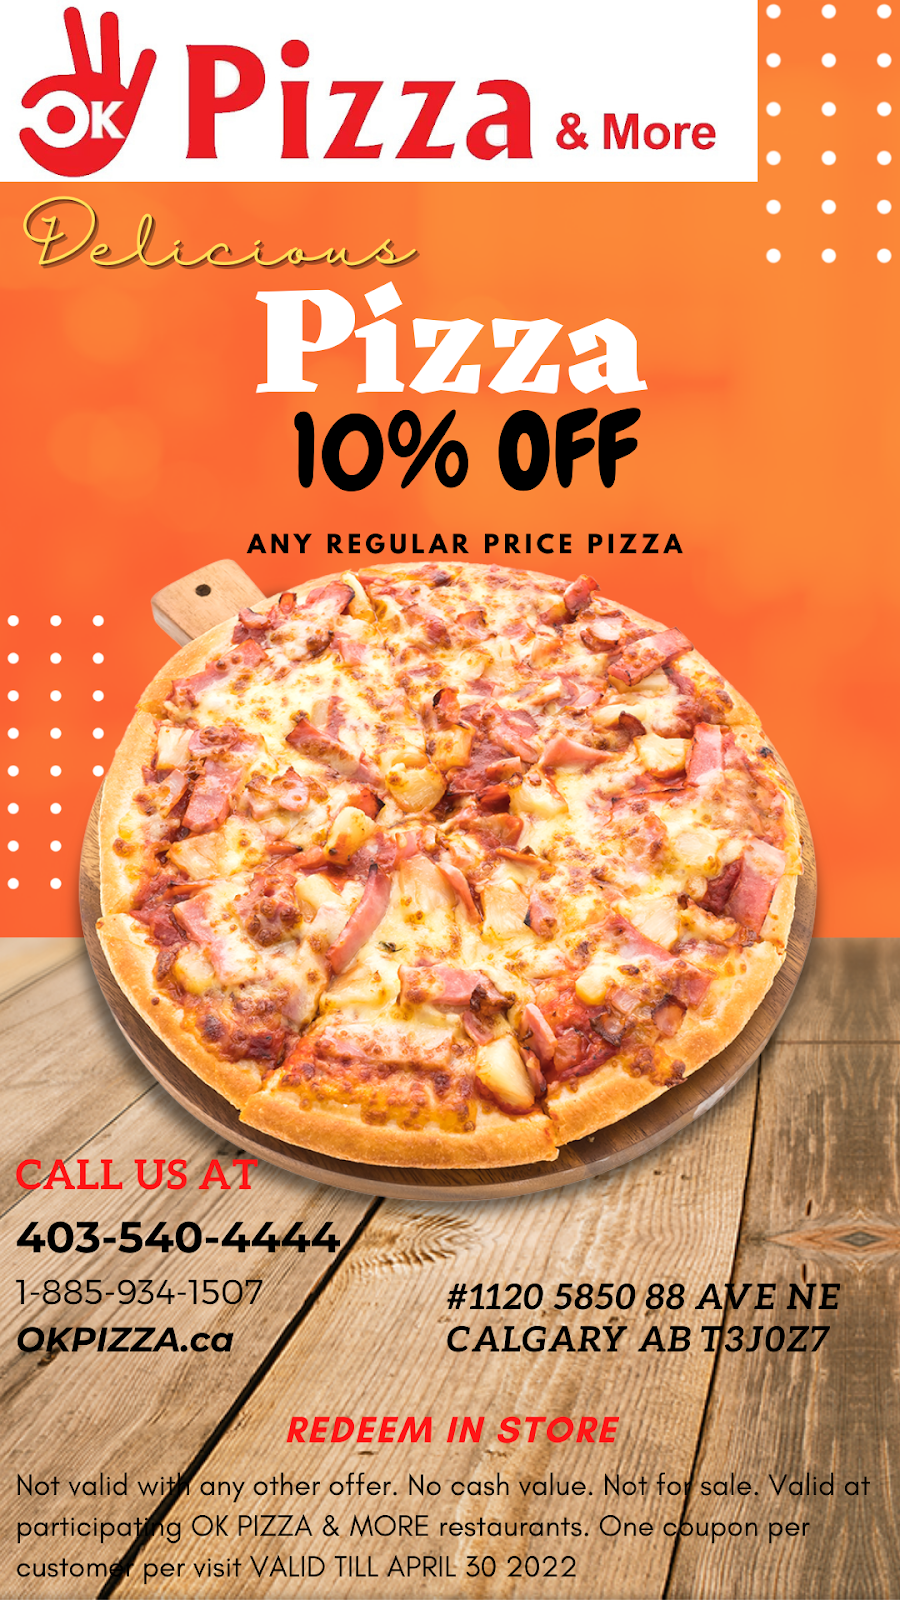 Ok Pizza & More | restaurant | 5850 88 Ave NE #1120, Calgary, AB T3J 0J2, Canada | 4035404444 OR +1 403-540-4444